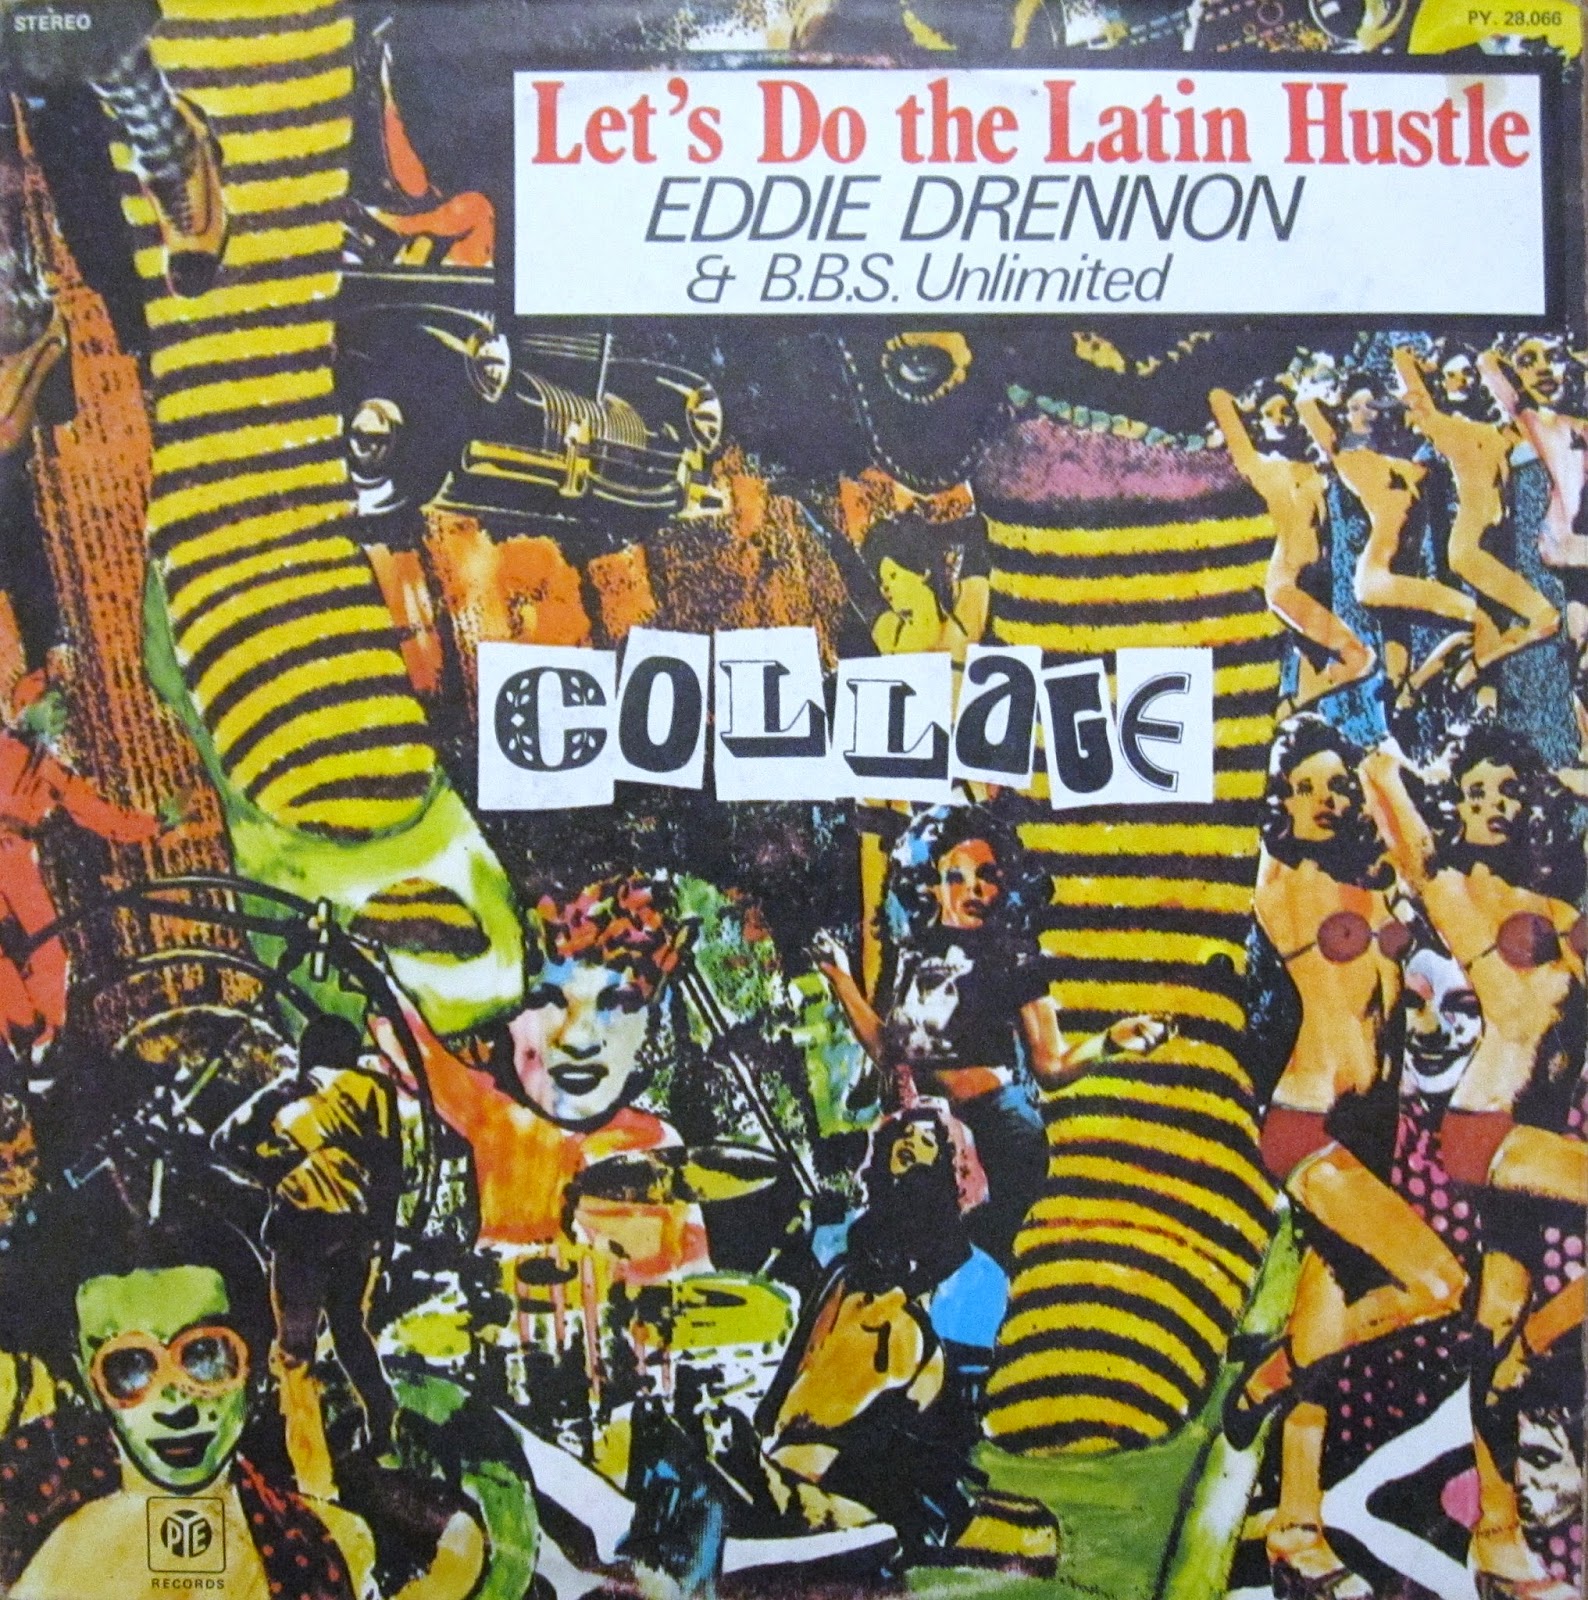 Do The Latin Hustle 7